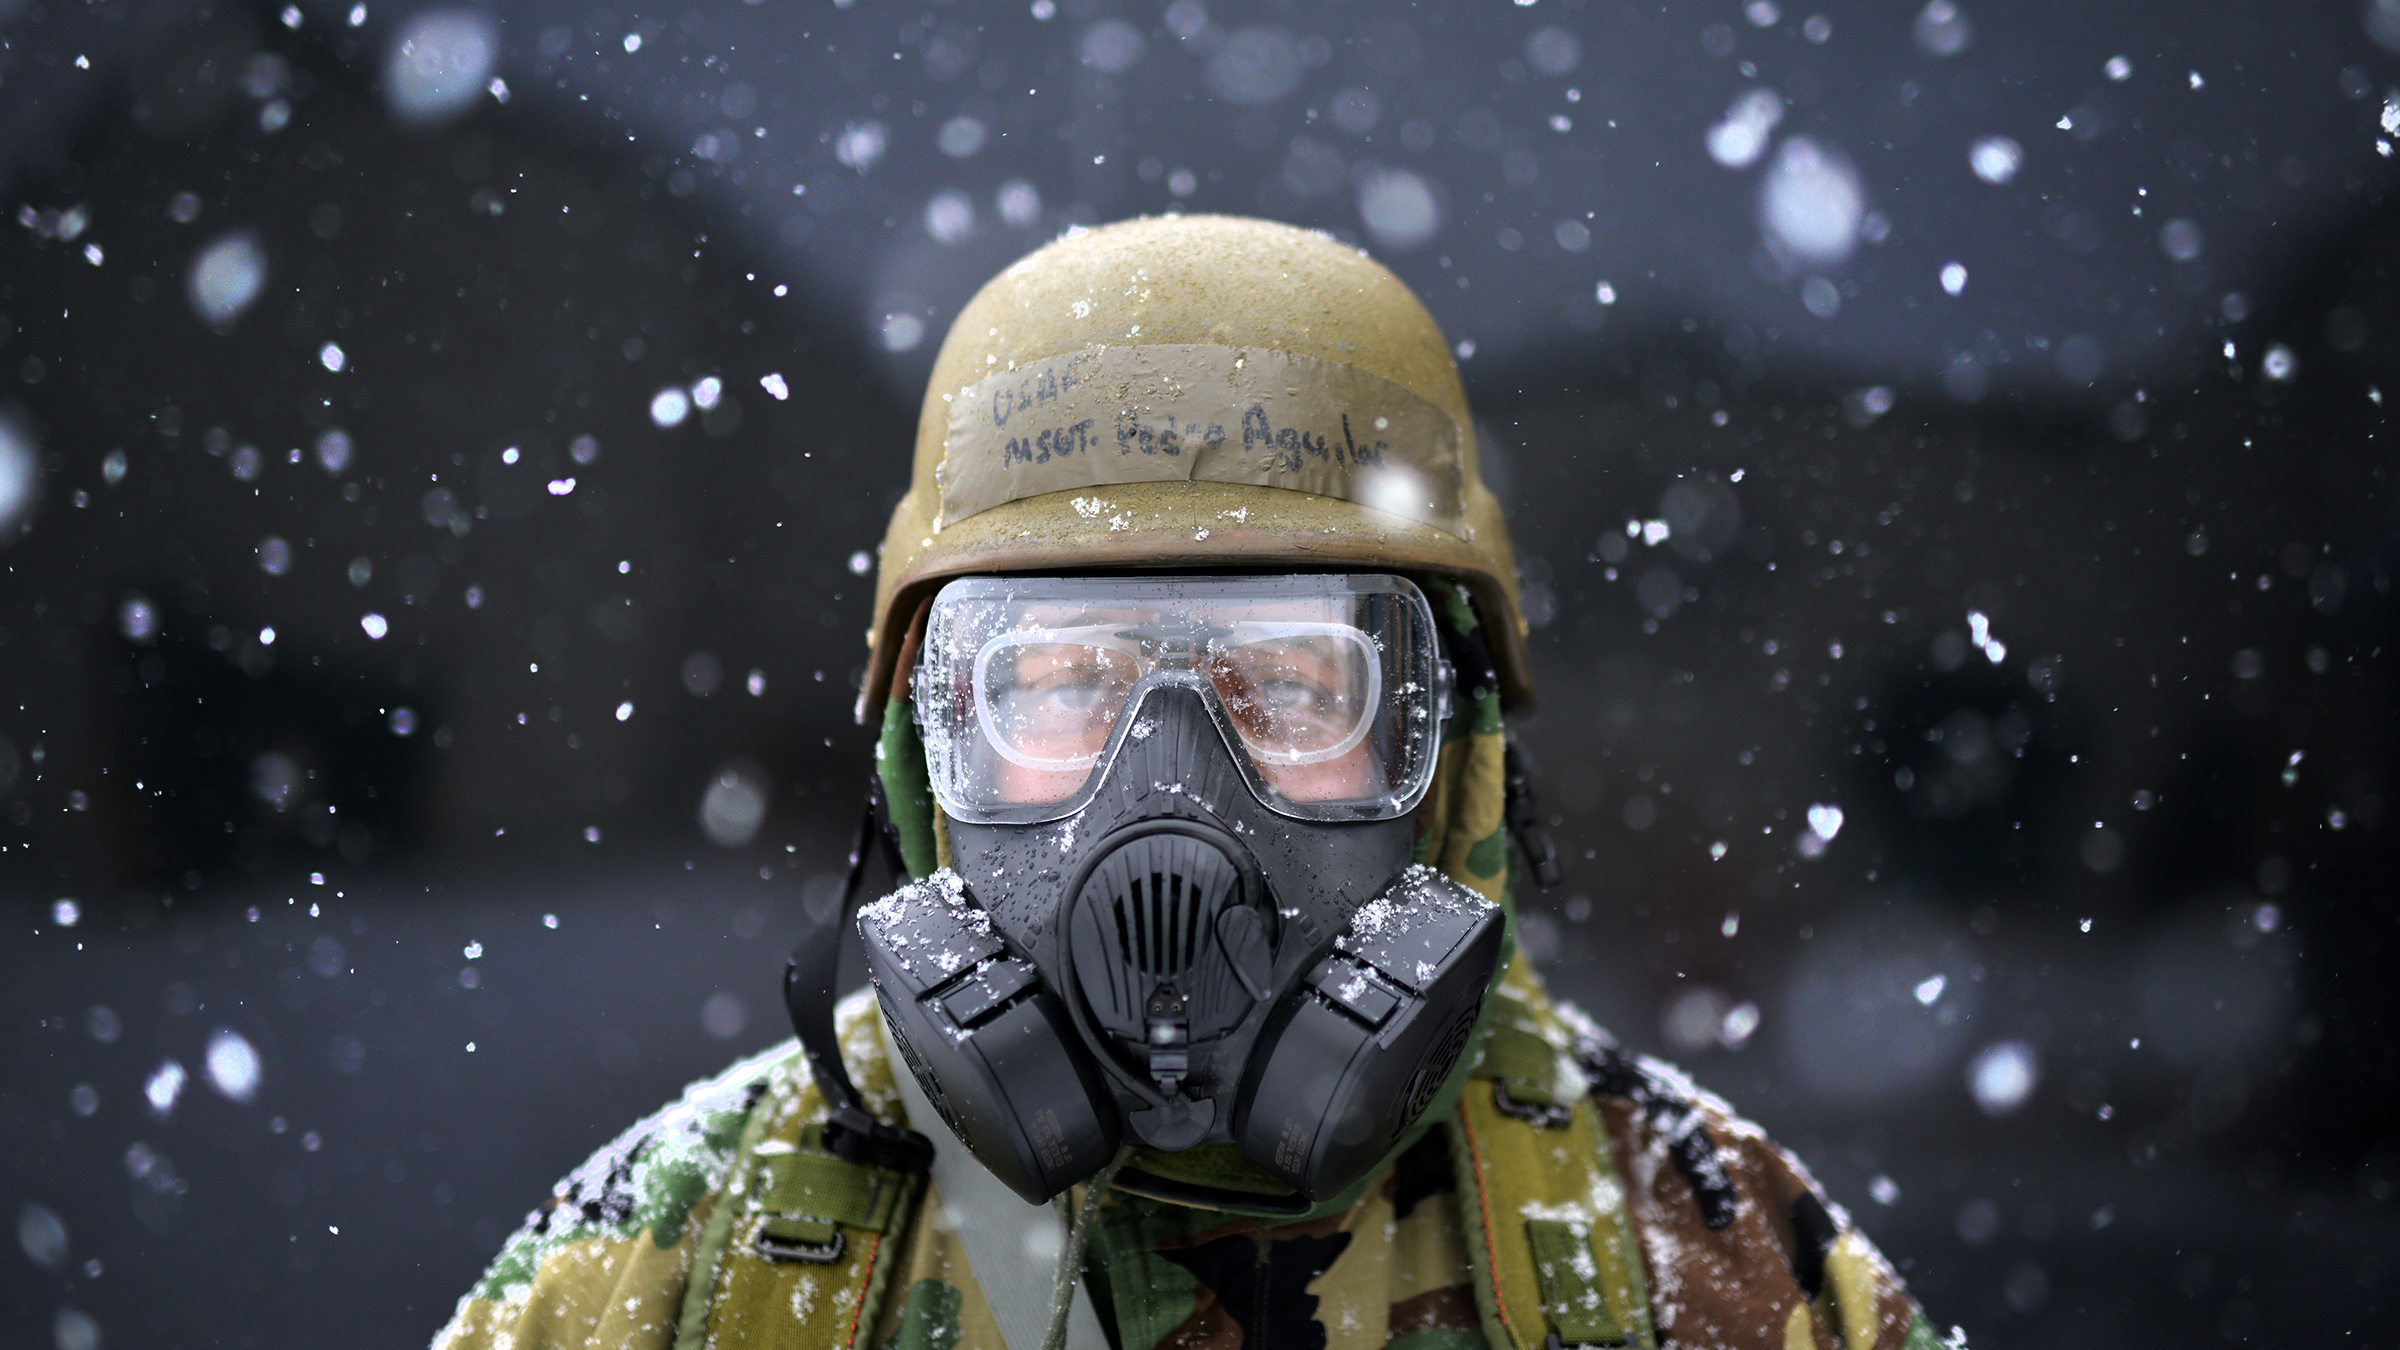 Soldier wearing uniform, helmet and gas mask